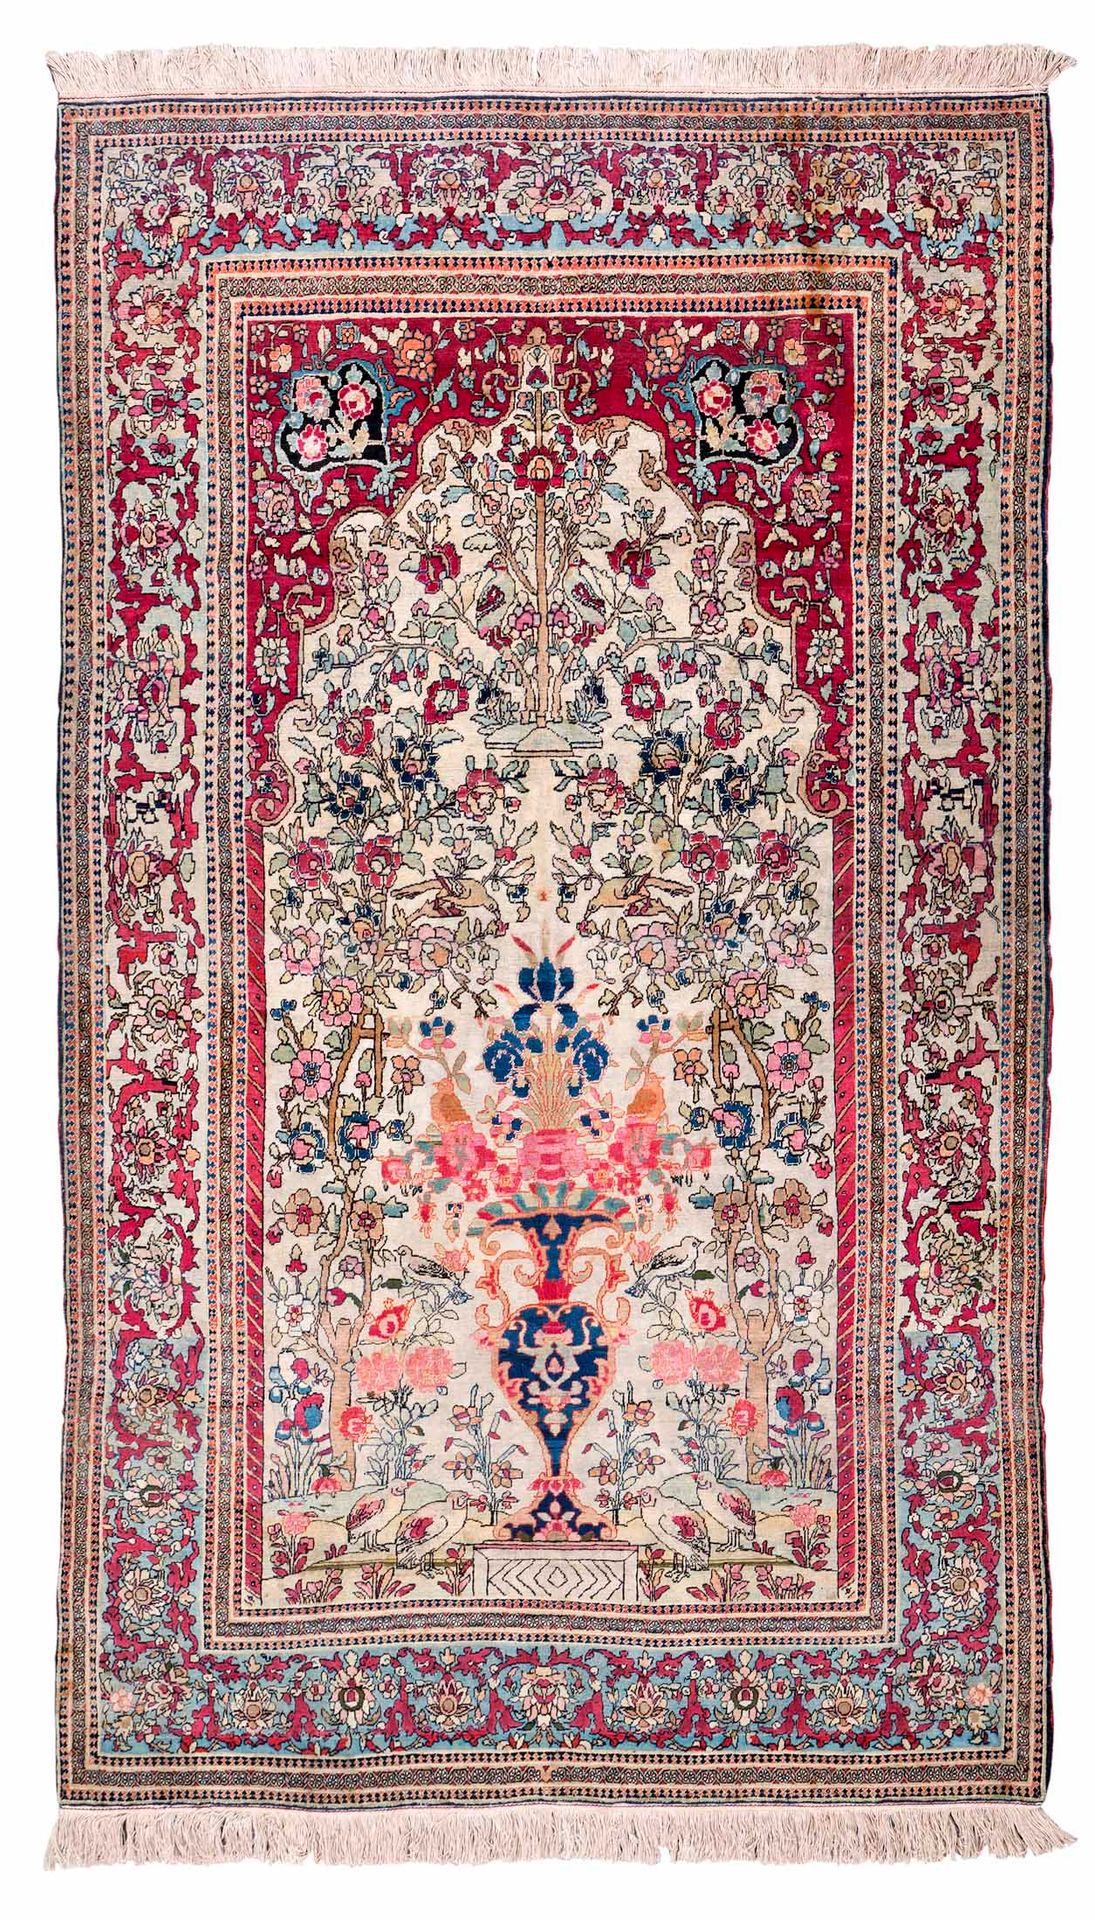 Null ISPAHAN carpet (Persia), late 19th century

Dimensions : 234 x 144cm.

Tech&hellip;